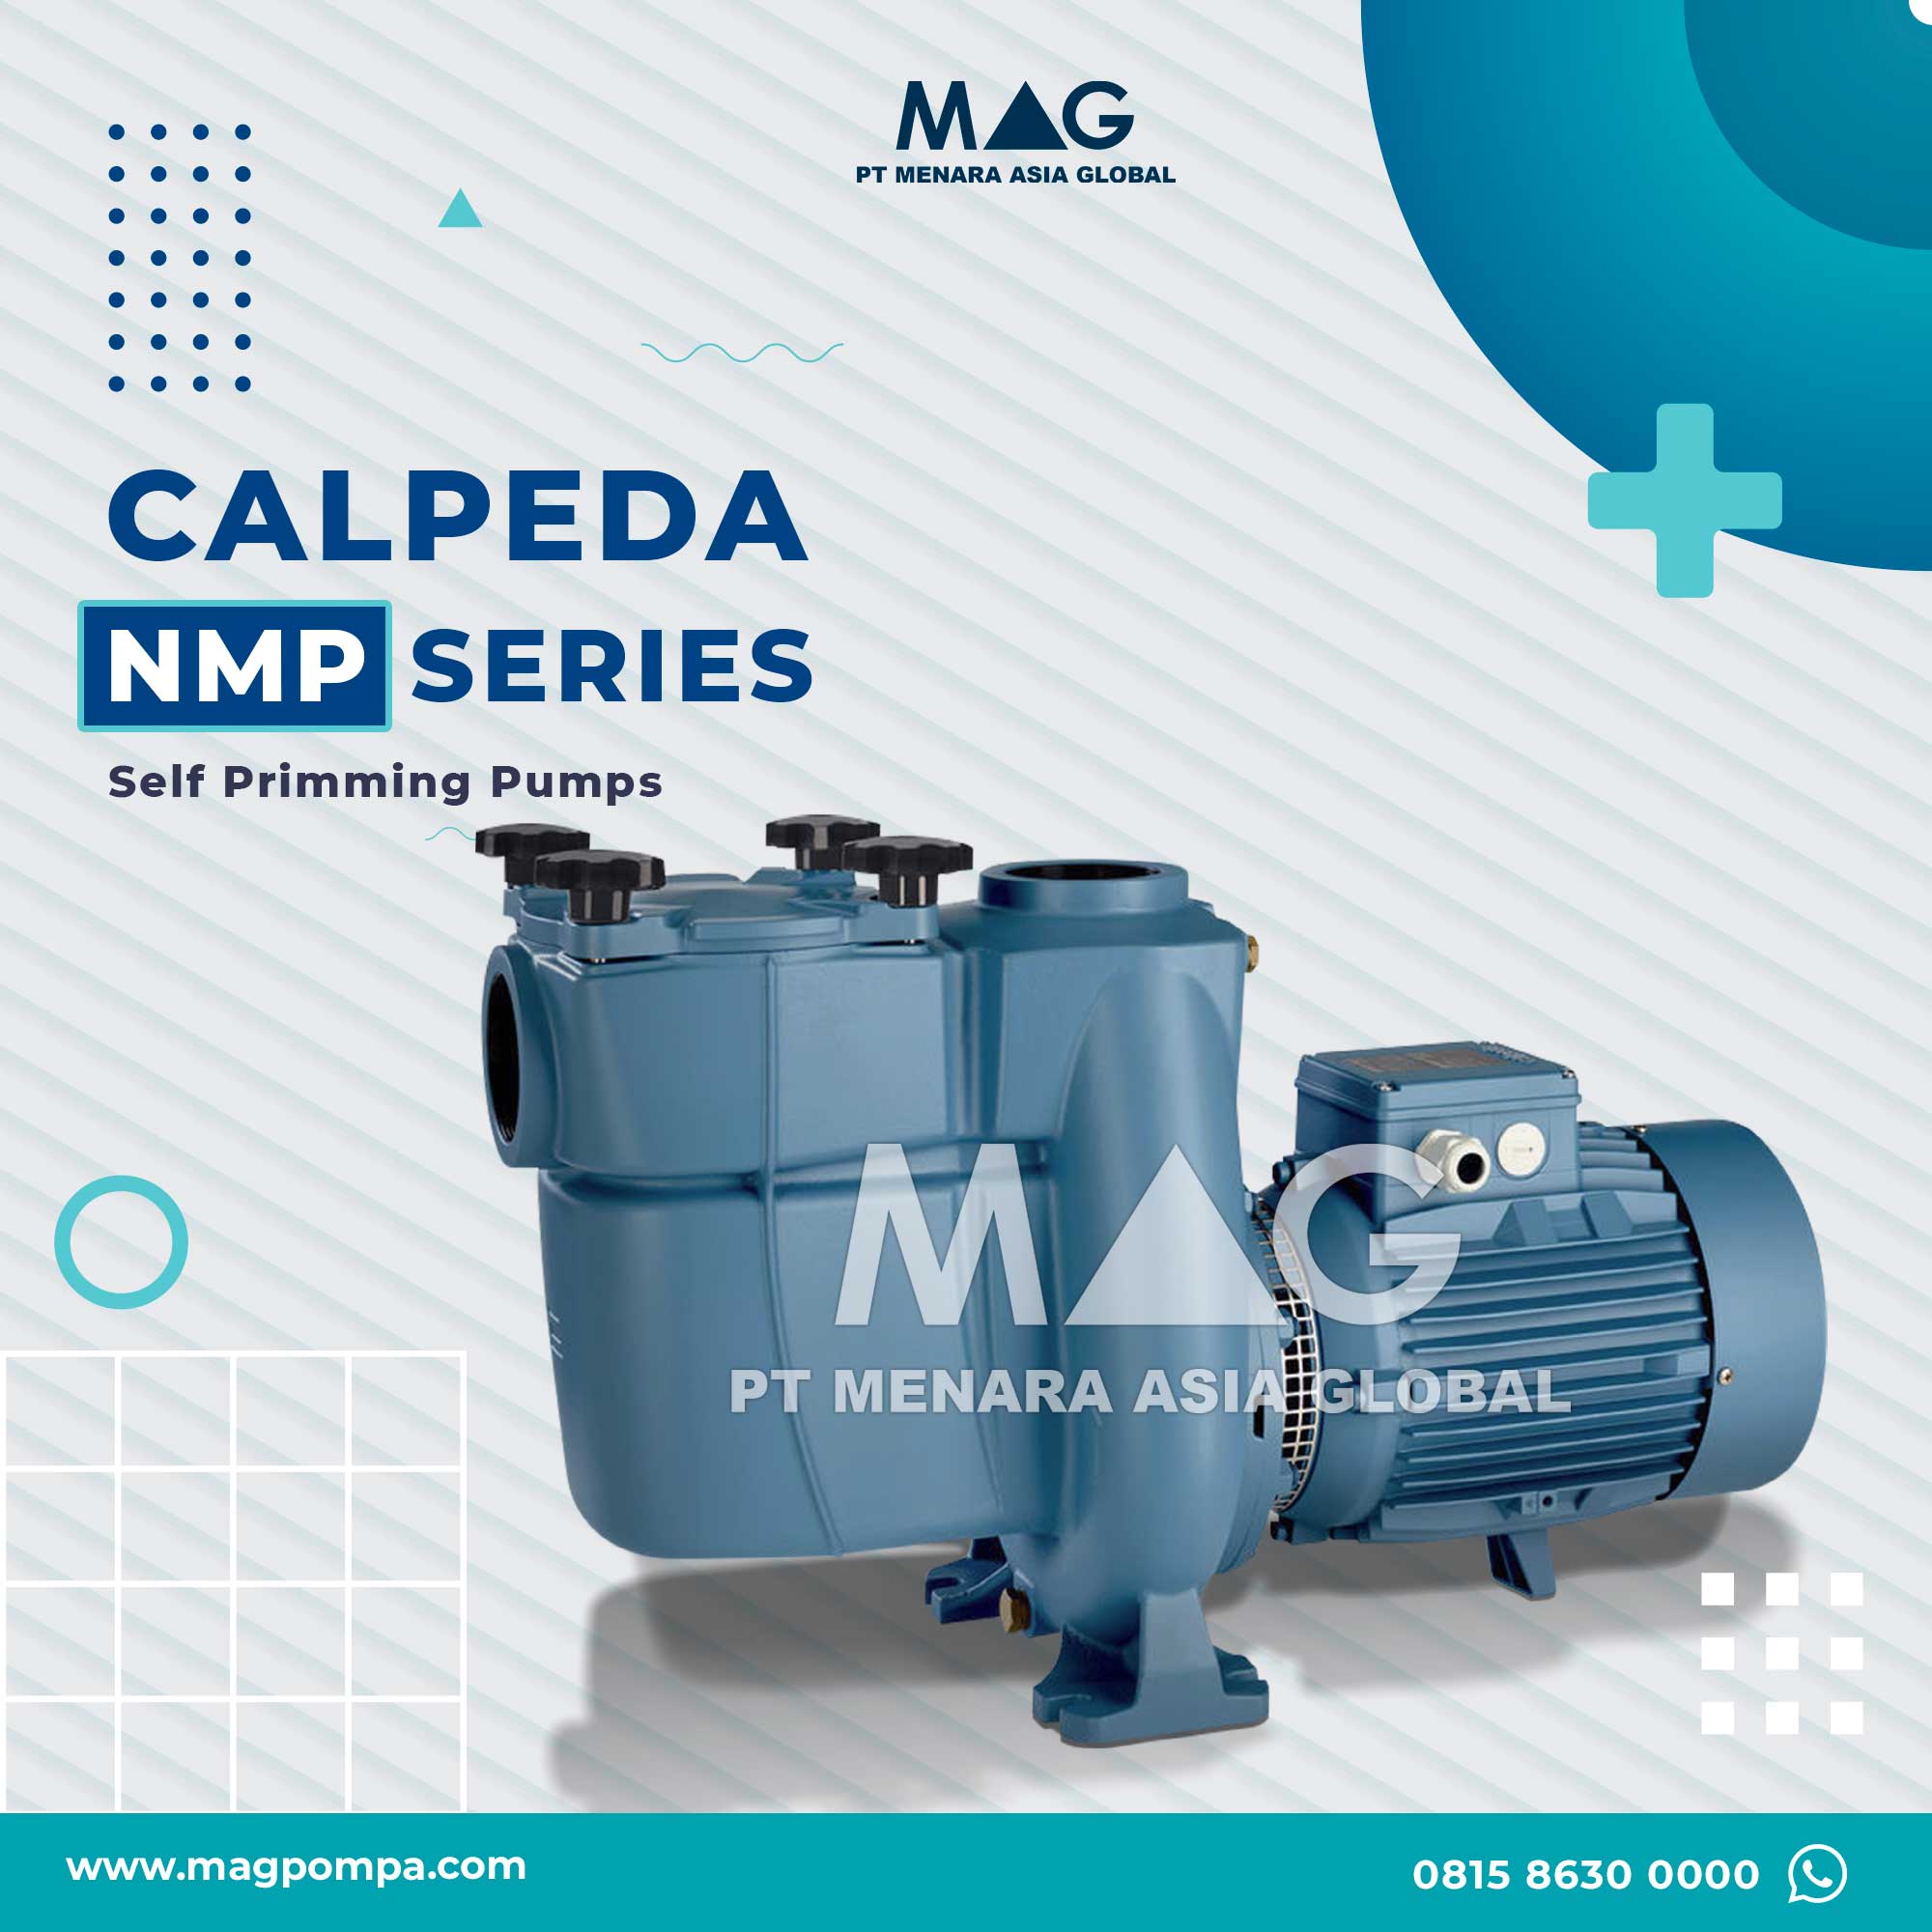 Pompa Self Primming Calpeda NMP Series